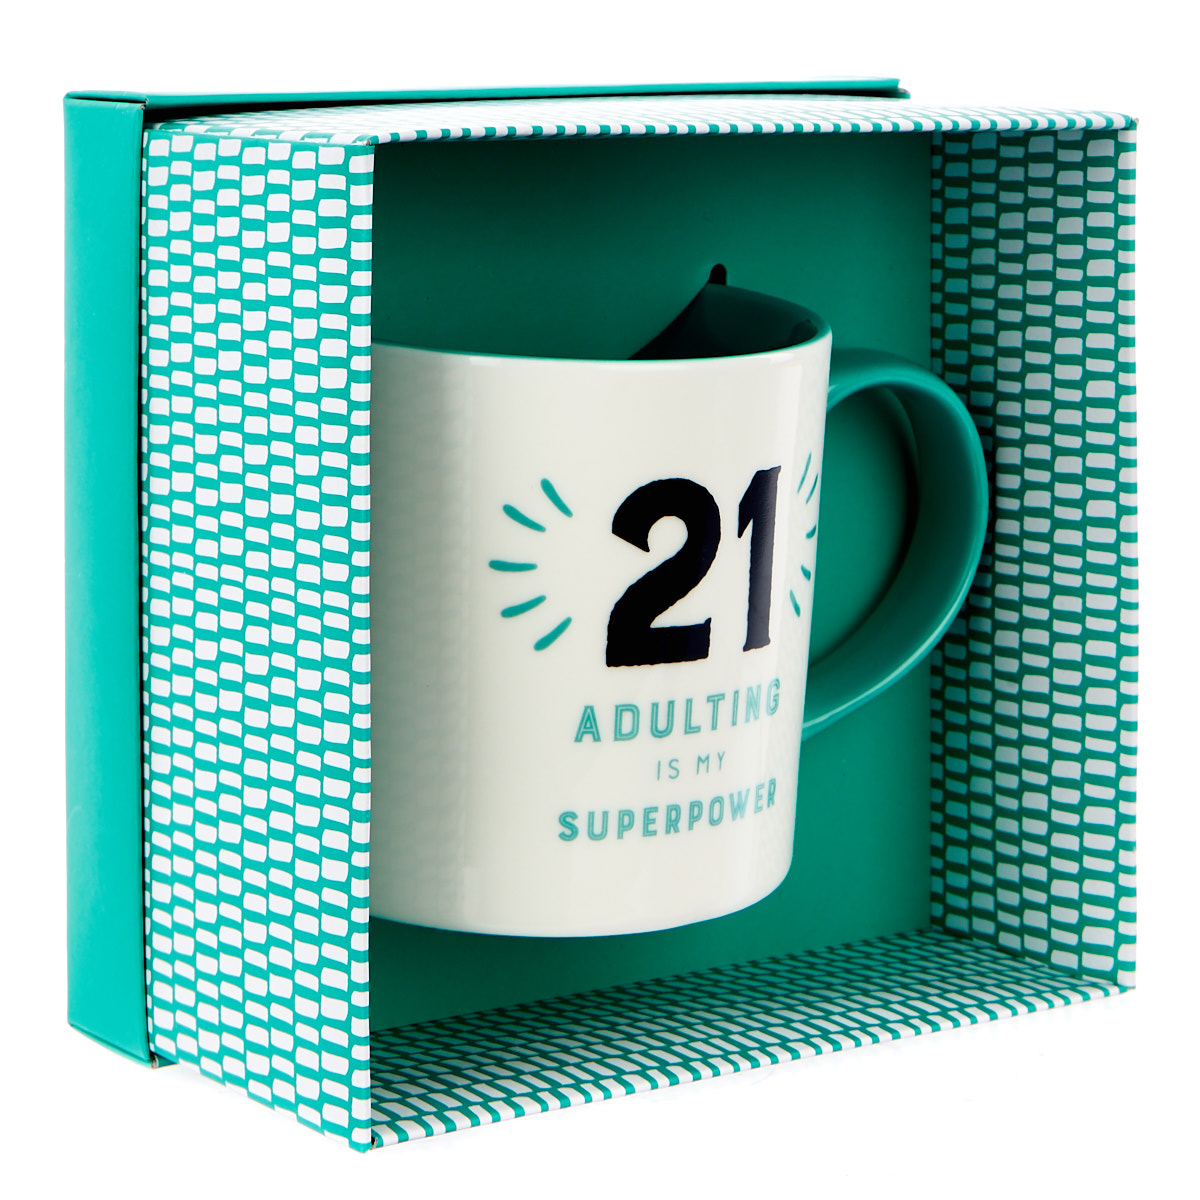 21st Birthday Mug - Adulting Is My Superpower